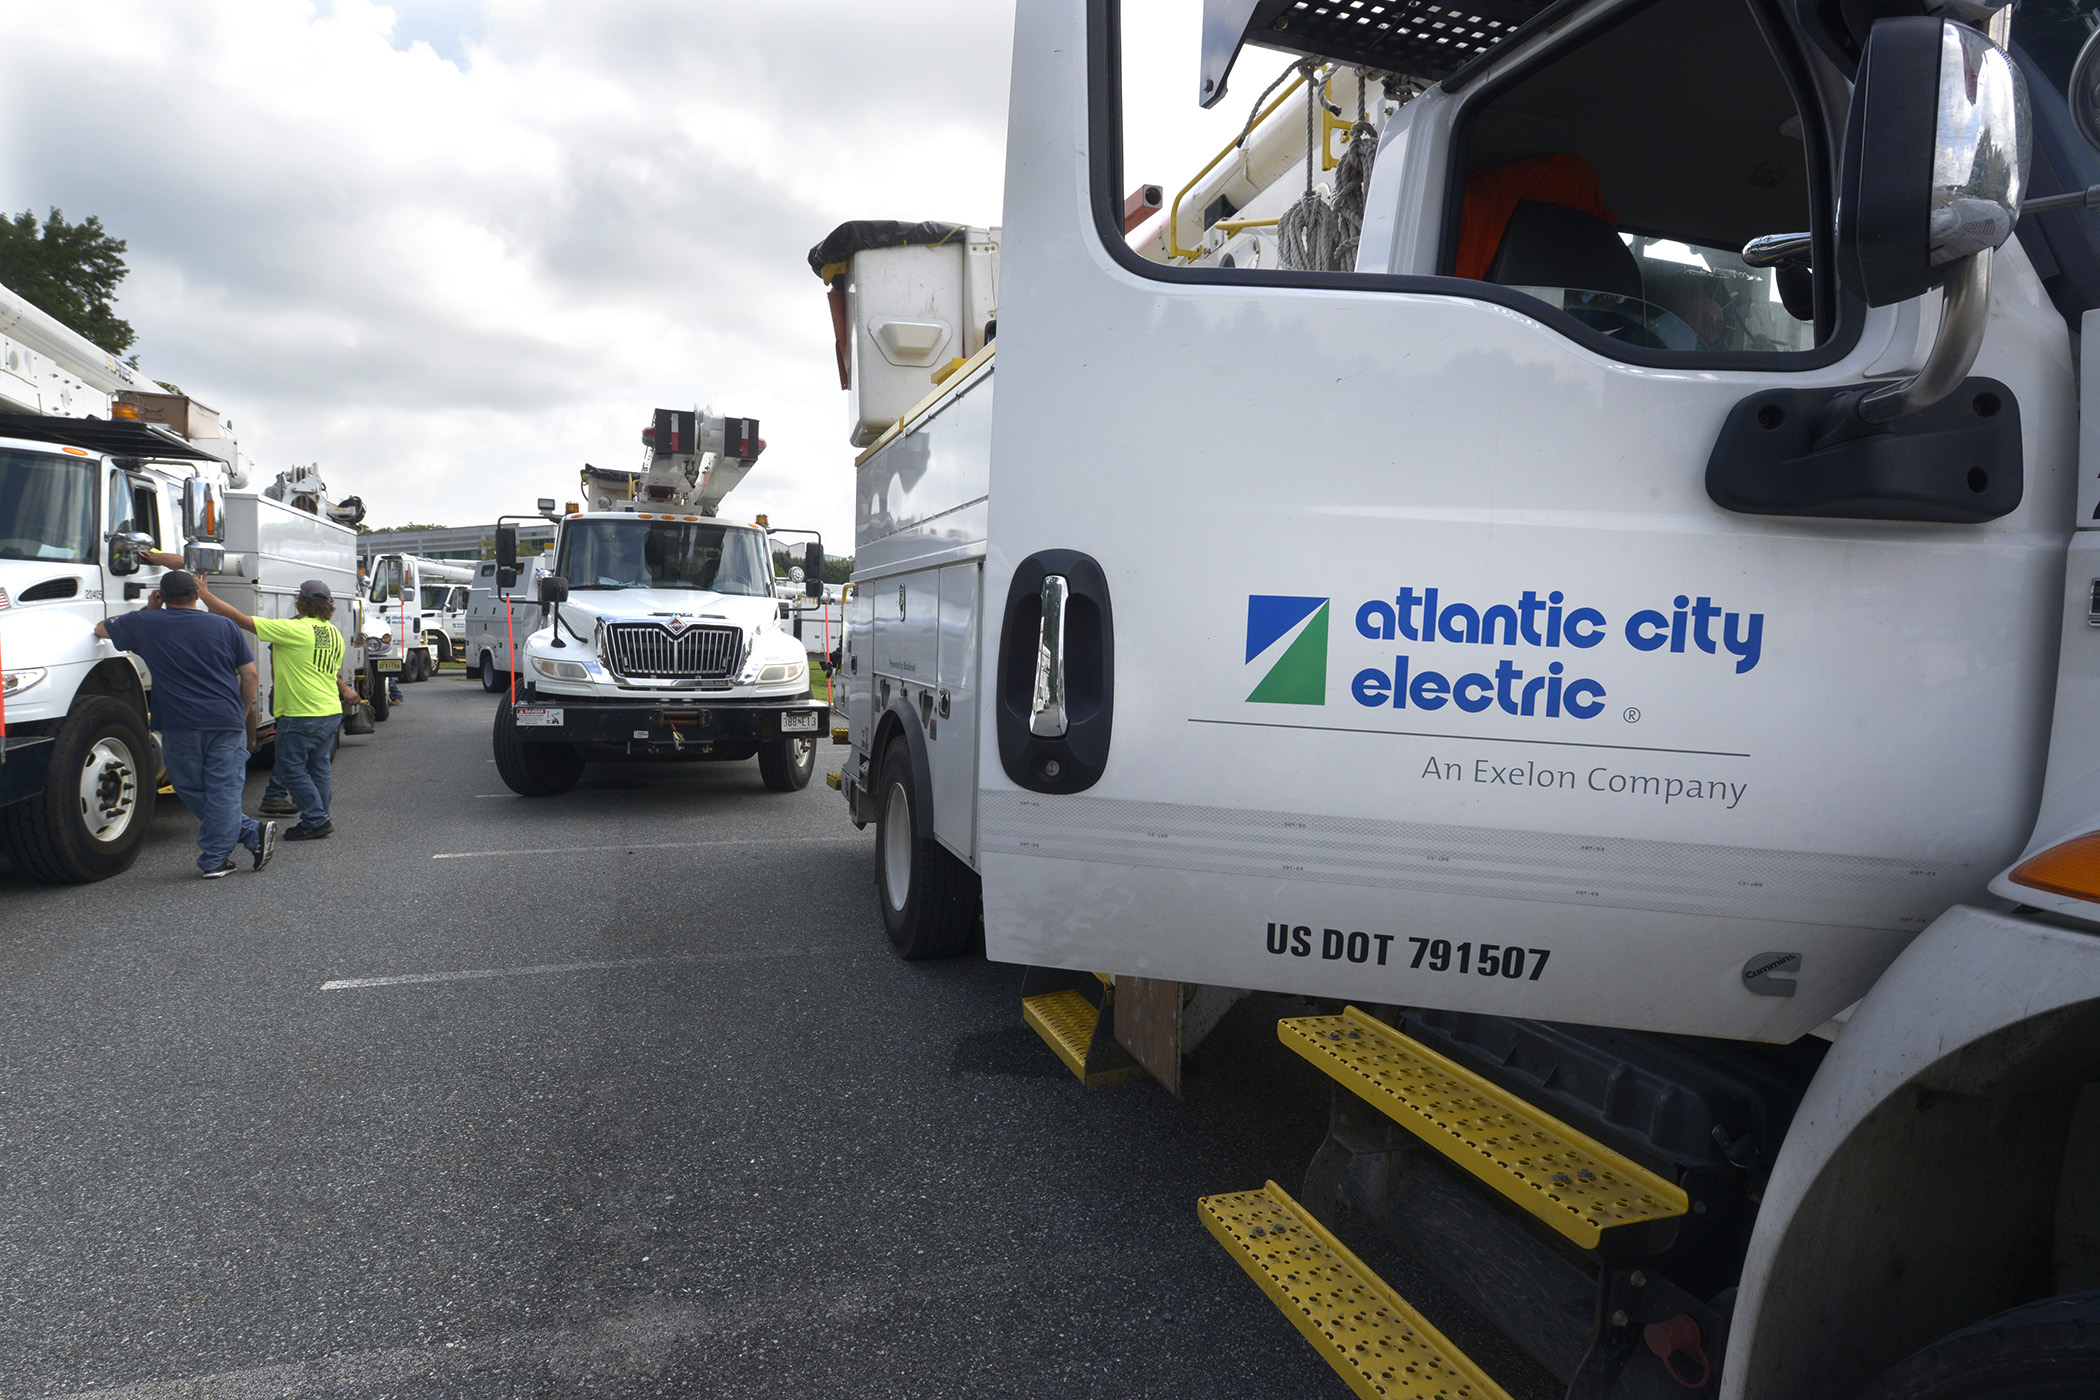 Atlantic City Electric - Our Companies - Exelon